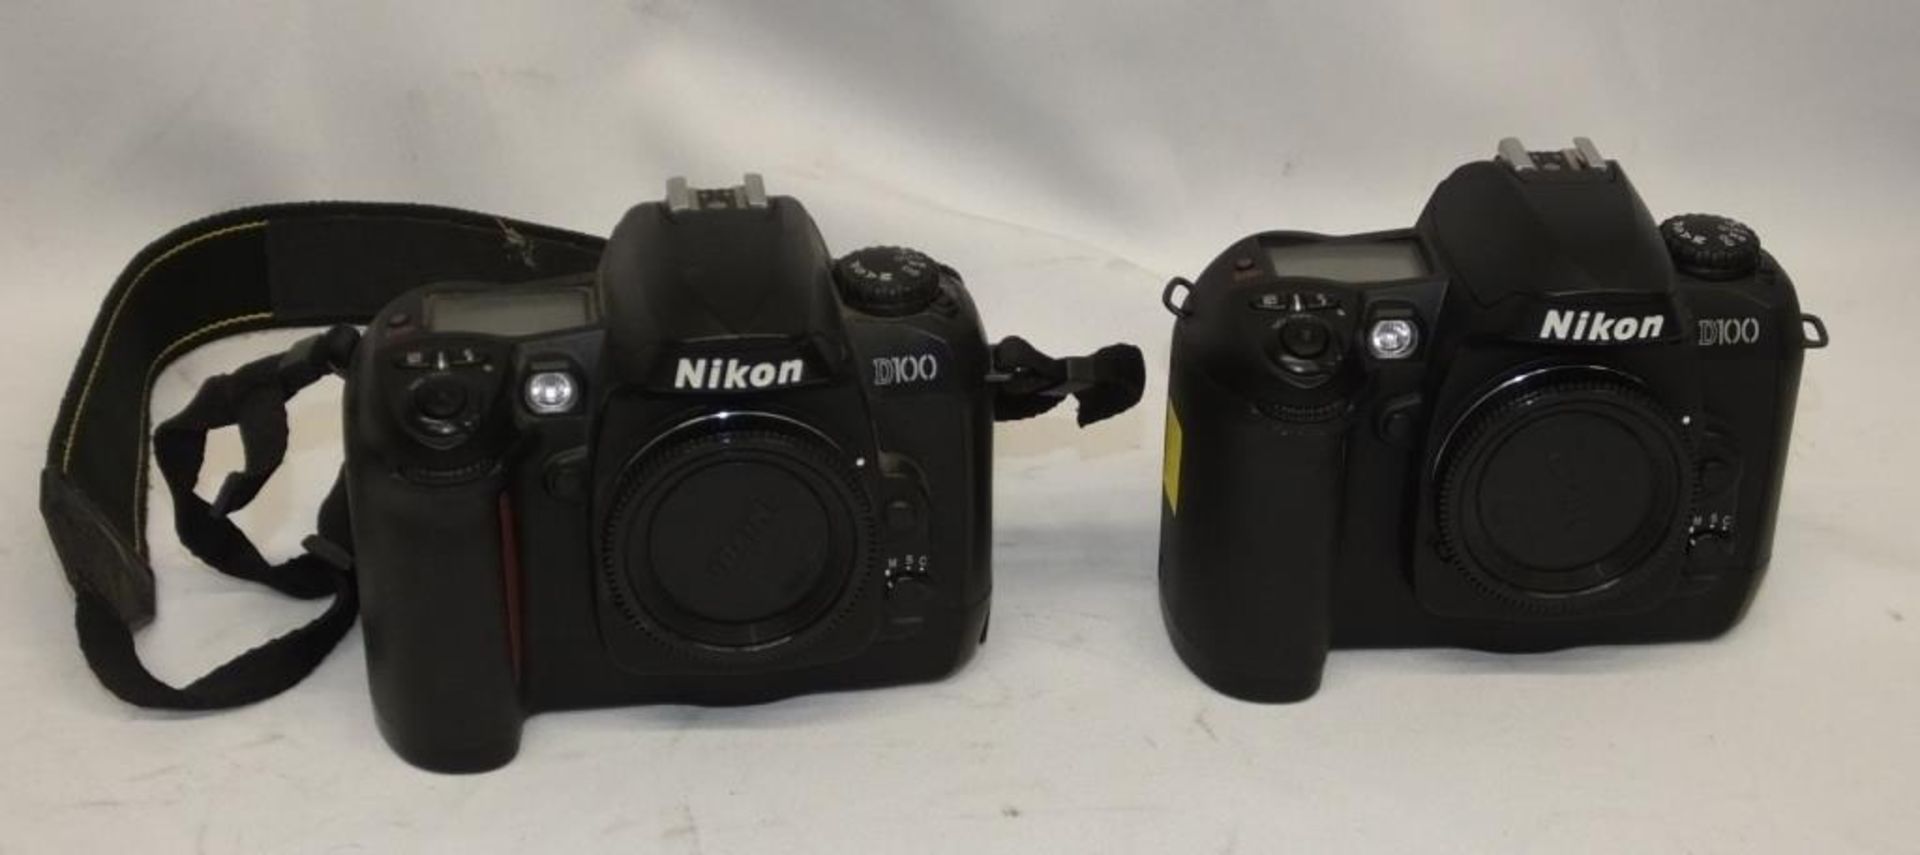 2x Nikon D100 camera bodies - serials 2269690, 2290444 - no batteries, no memory cards